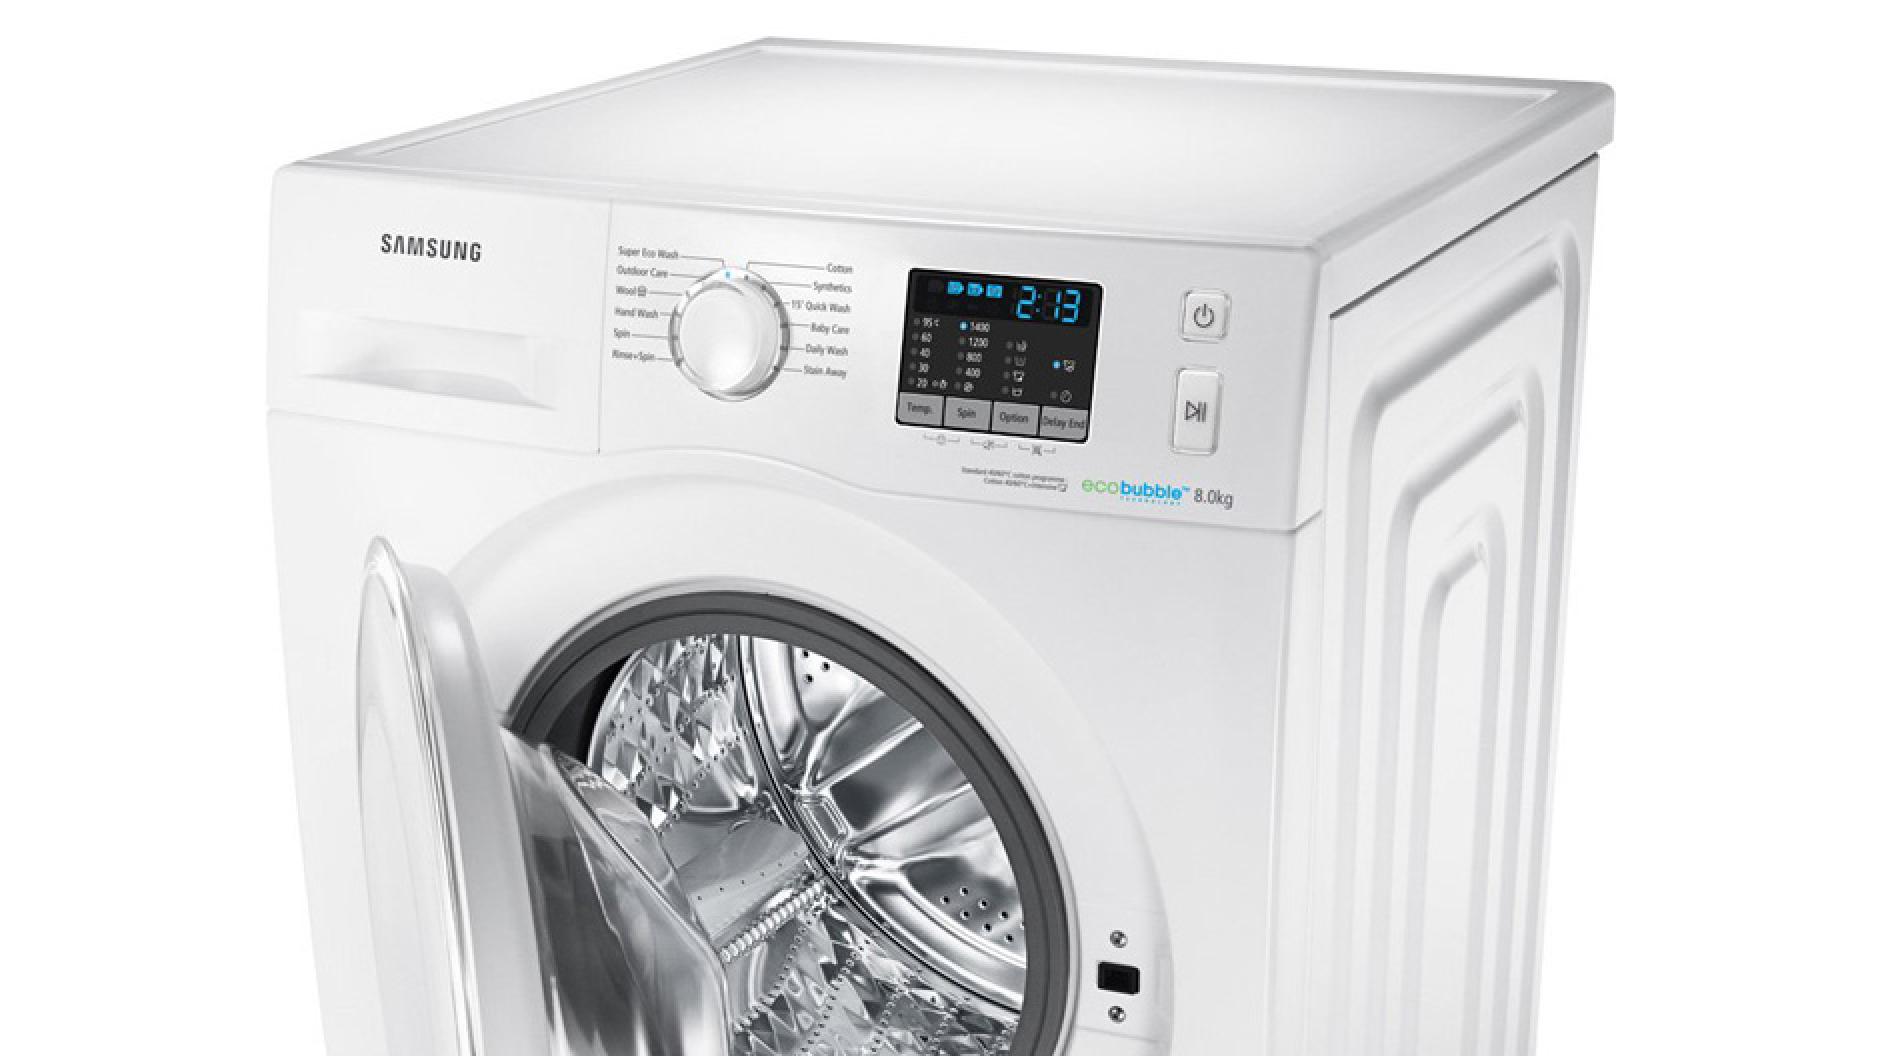 Nauwkeurig onenigheid Beschrijving Ontploffingsgevaar bij wasmachines Samsung - De Limburger Mobile